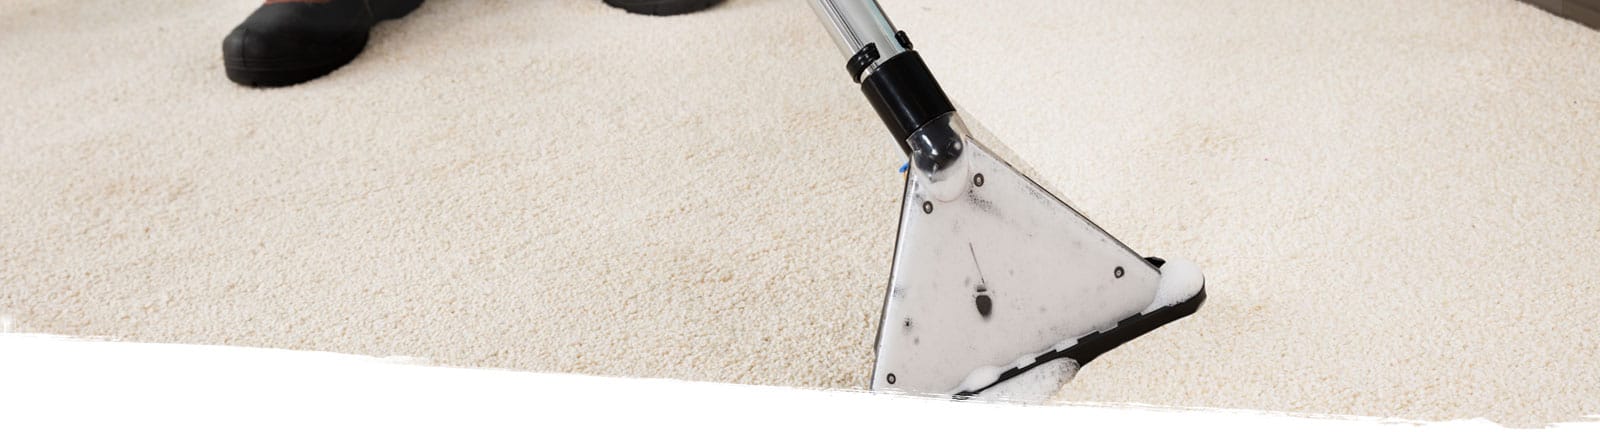 Carpet Cleaning Service Ottawa